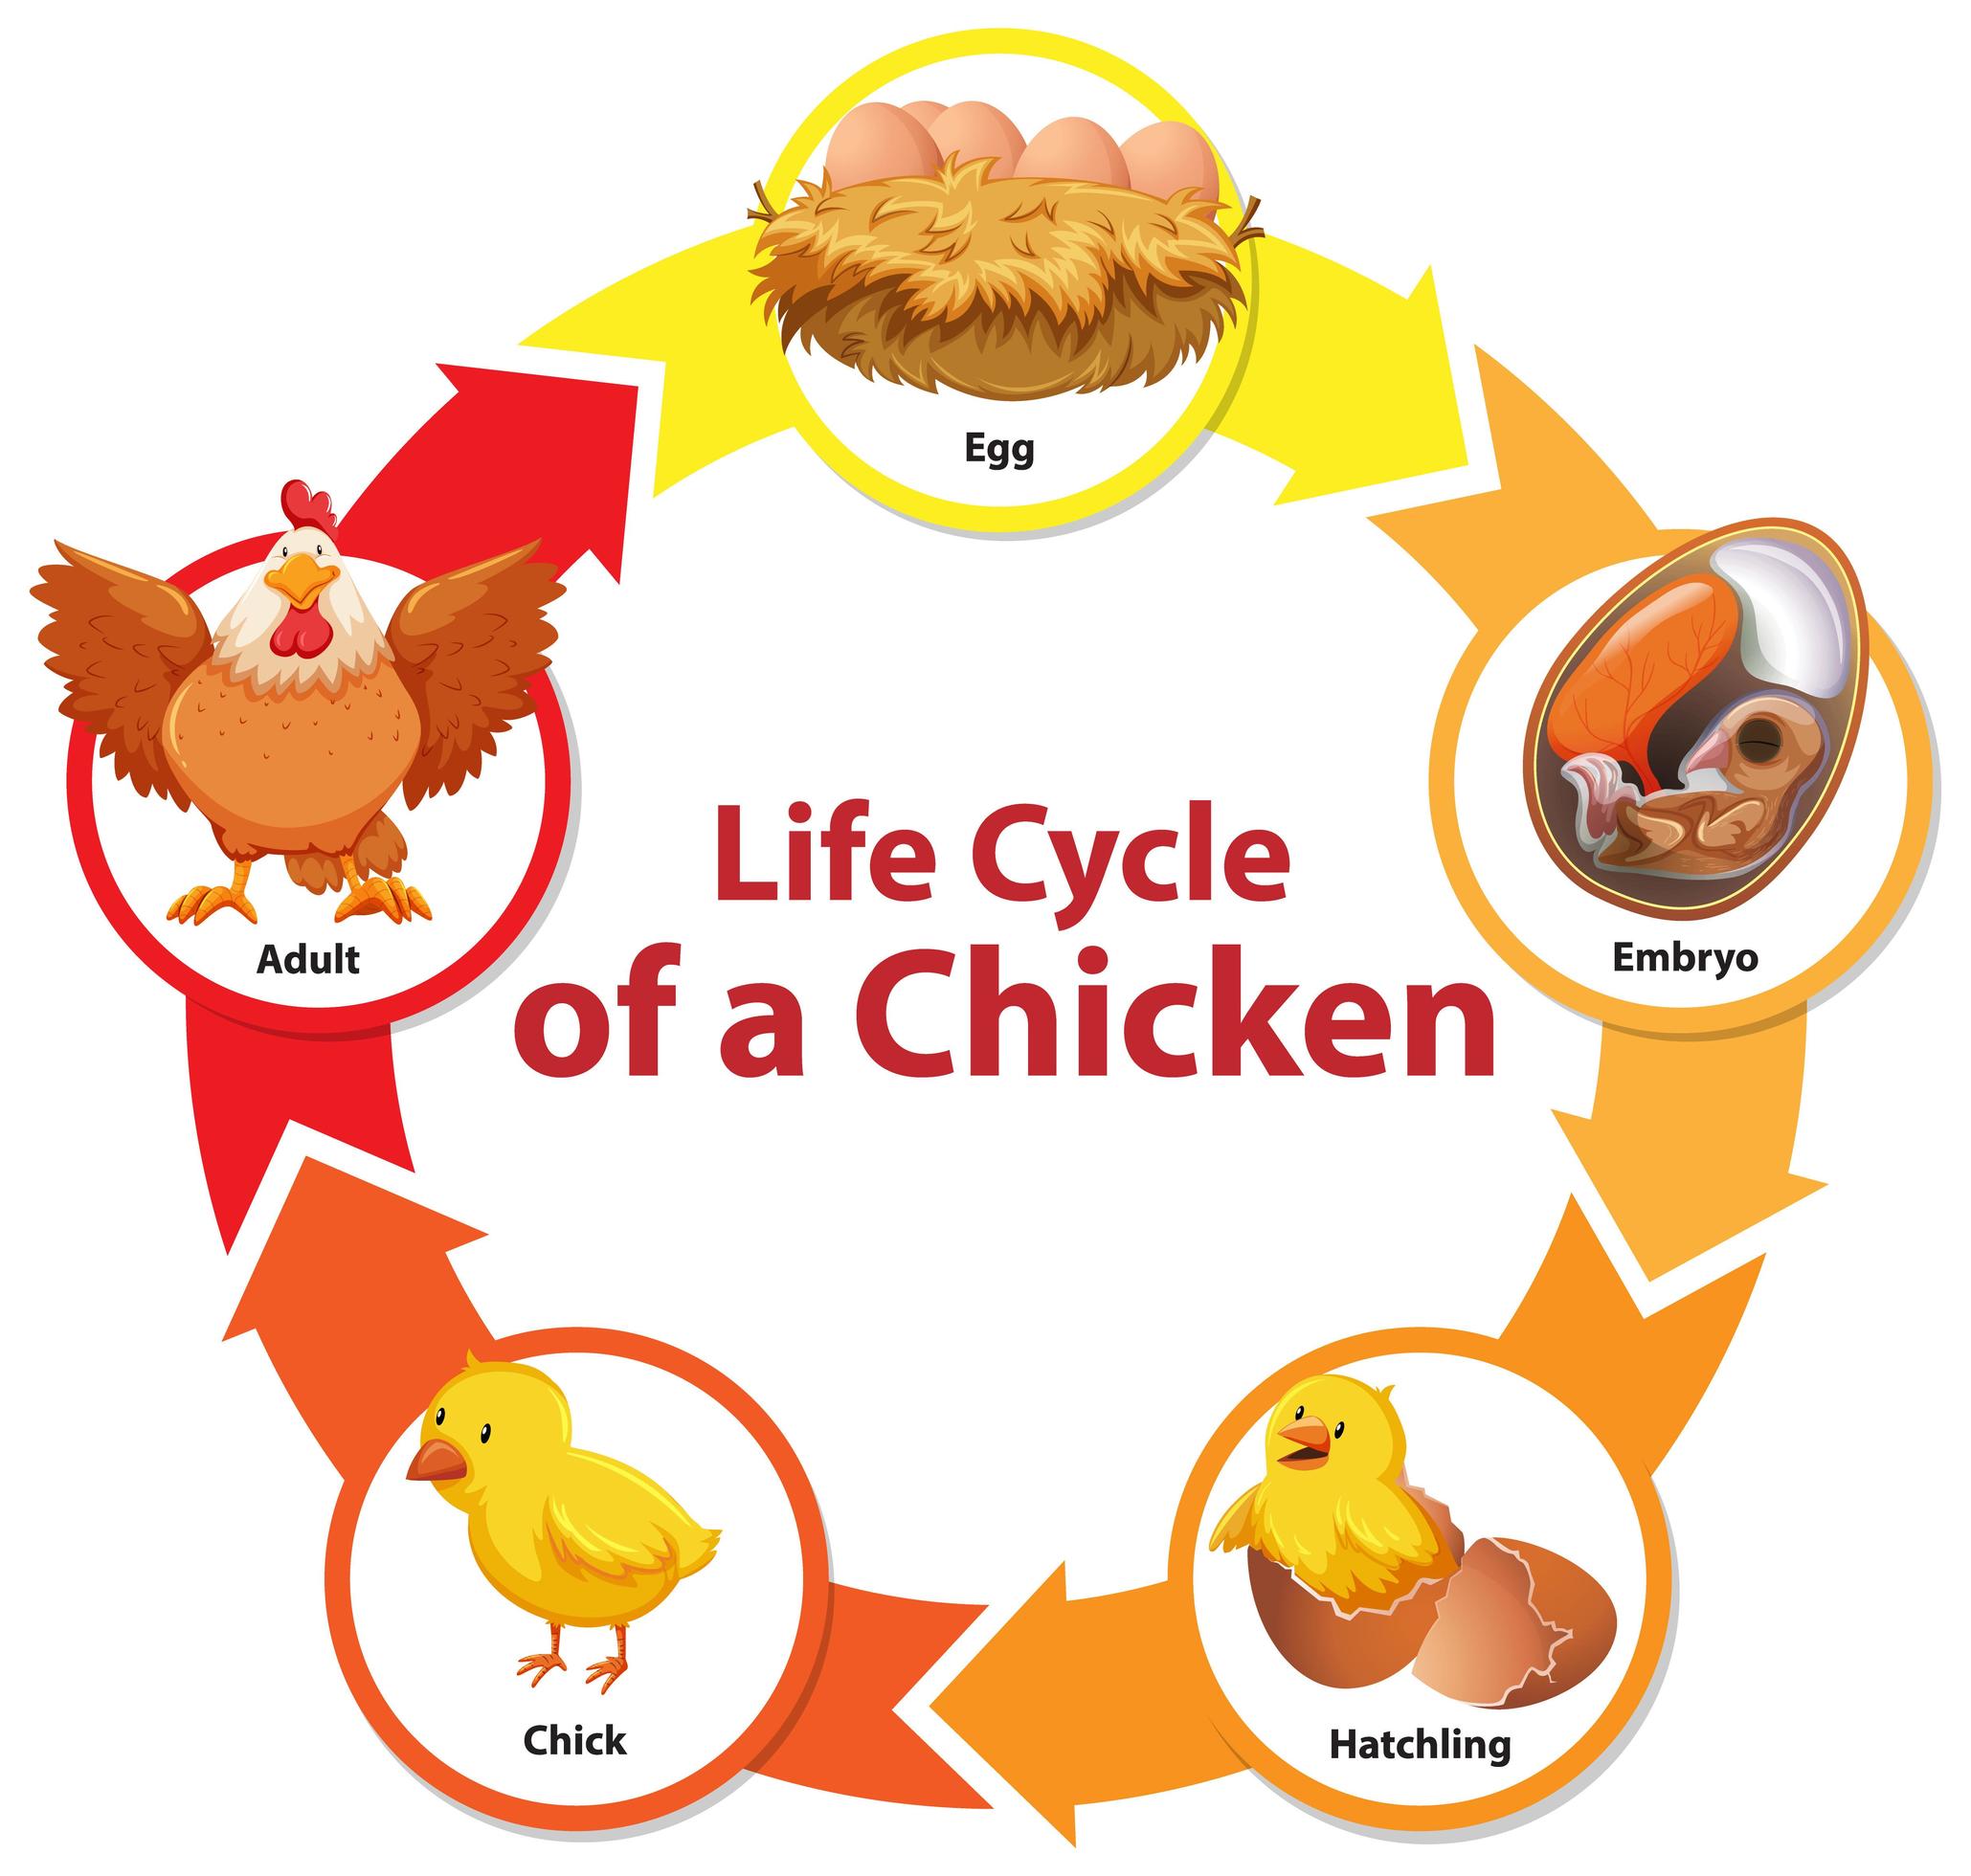 presentation chicken life cycle